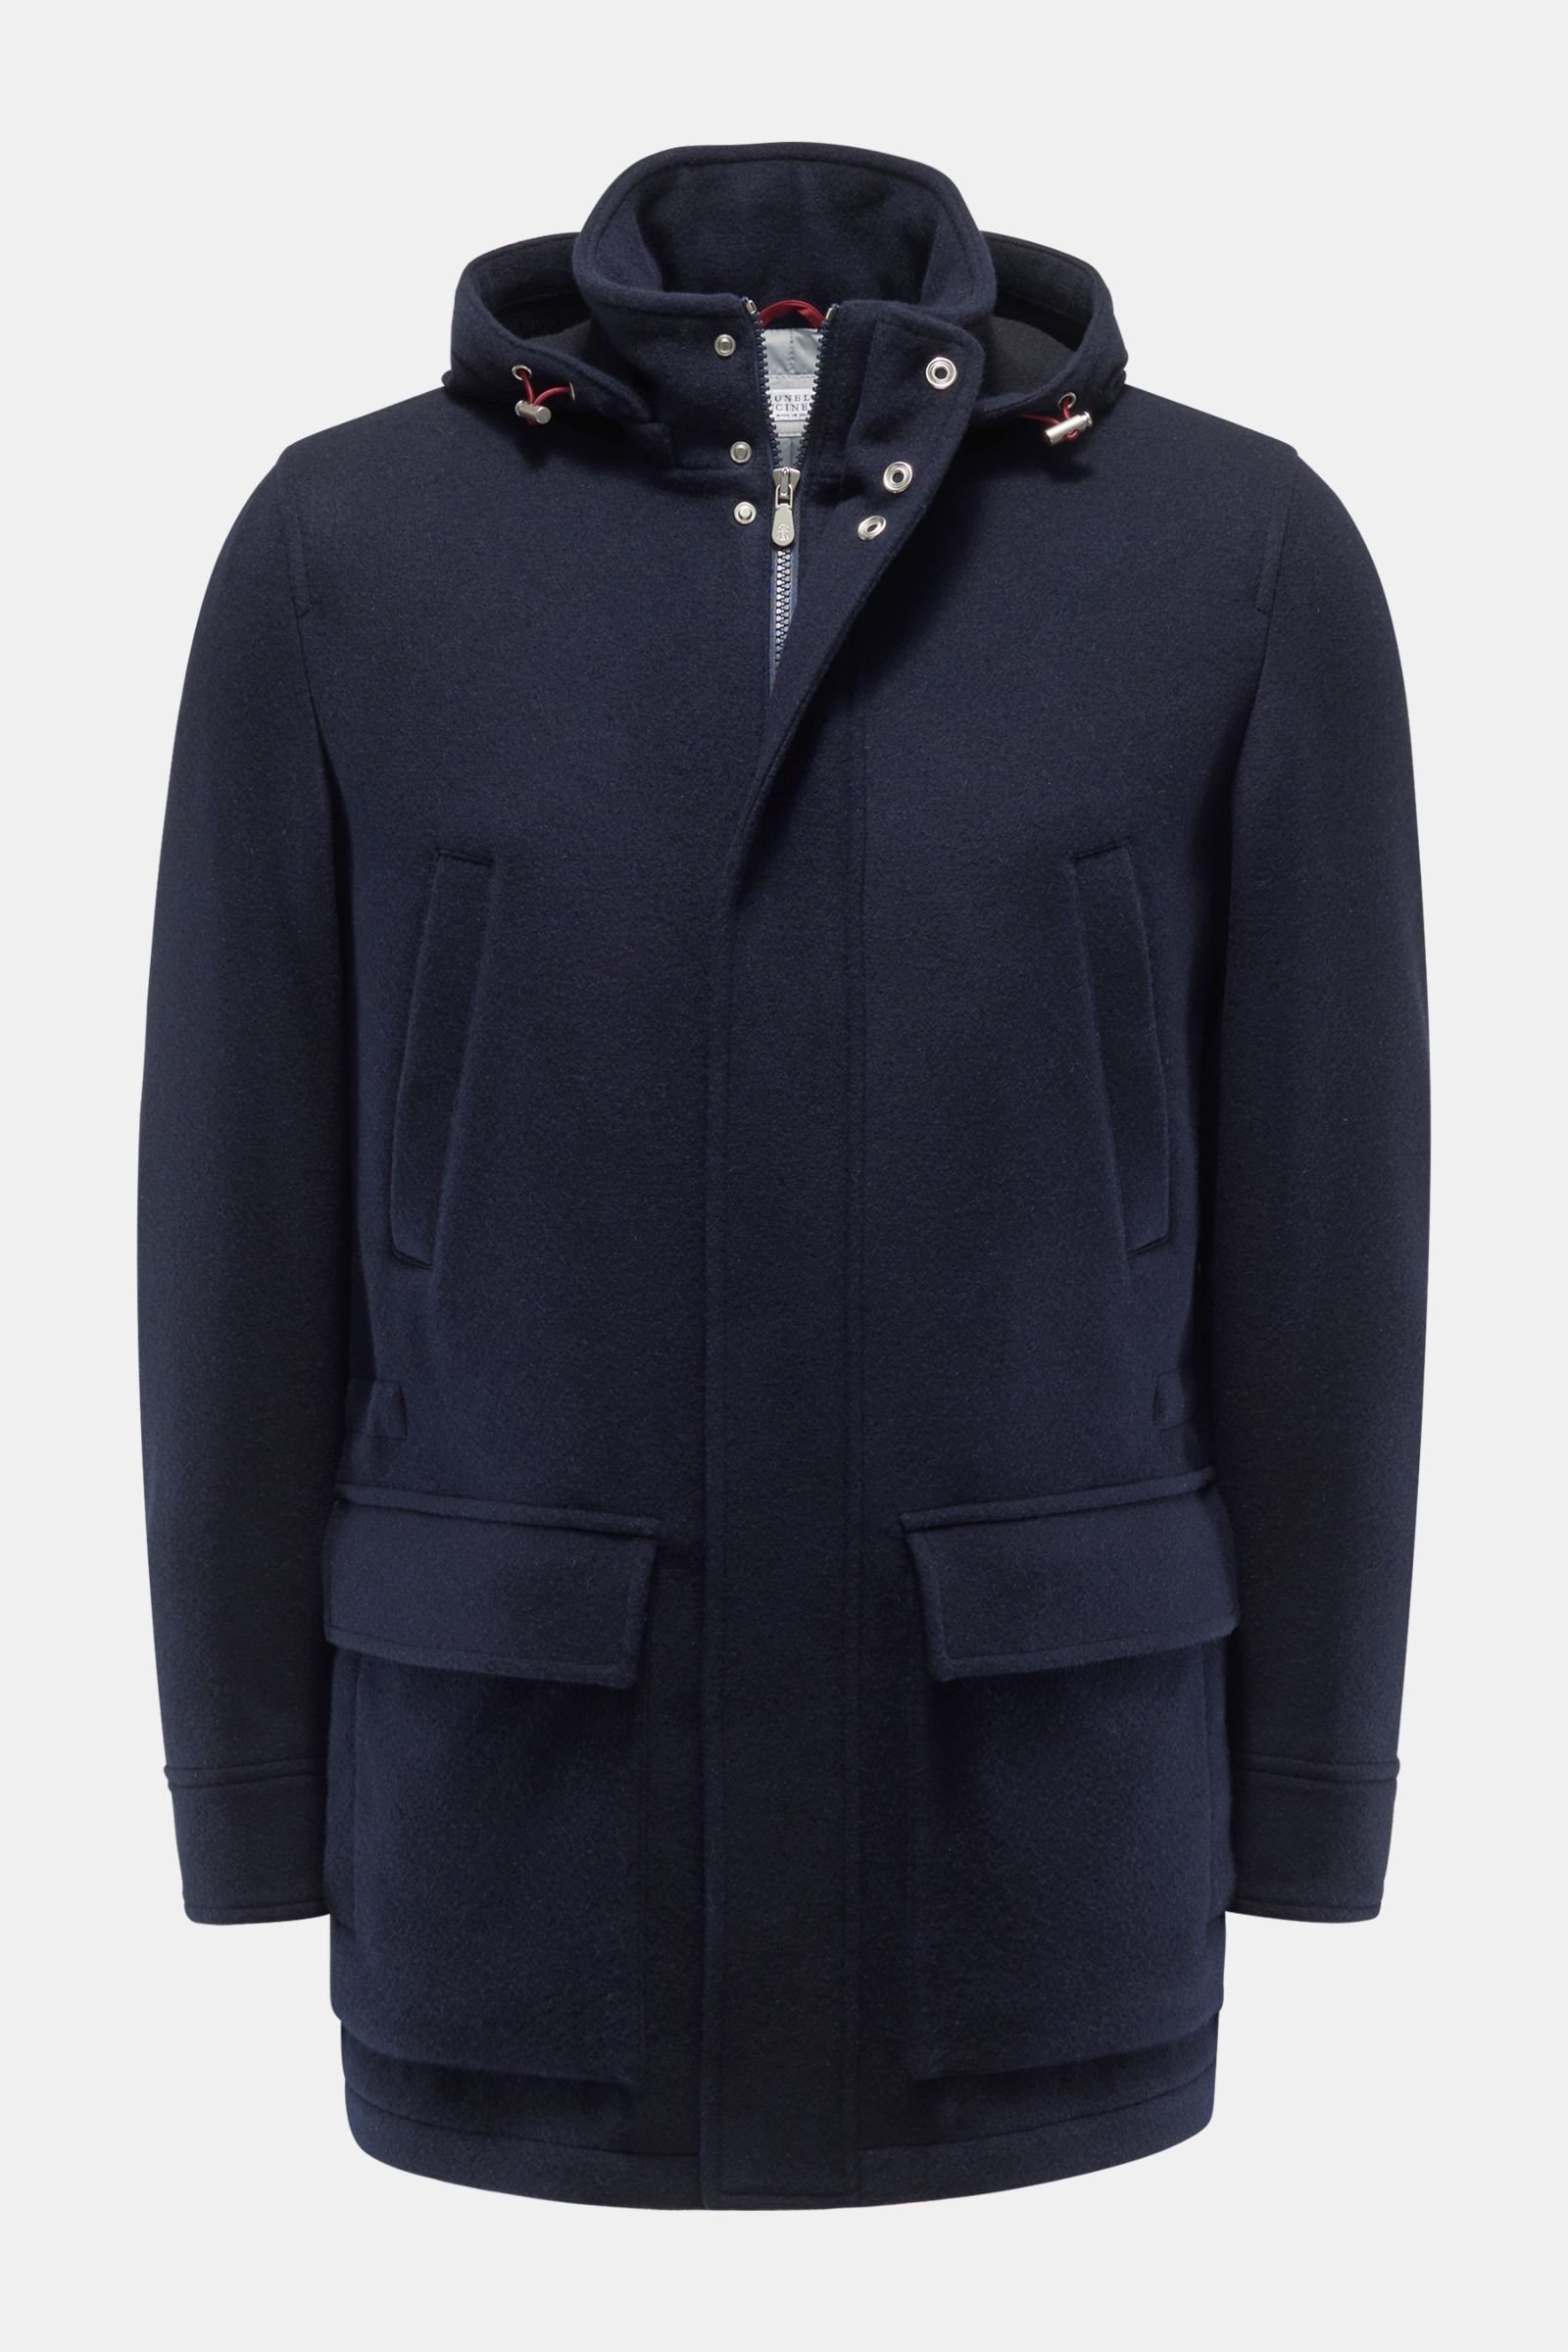 Cashmere jacket navy